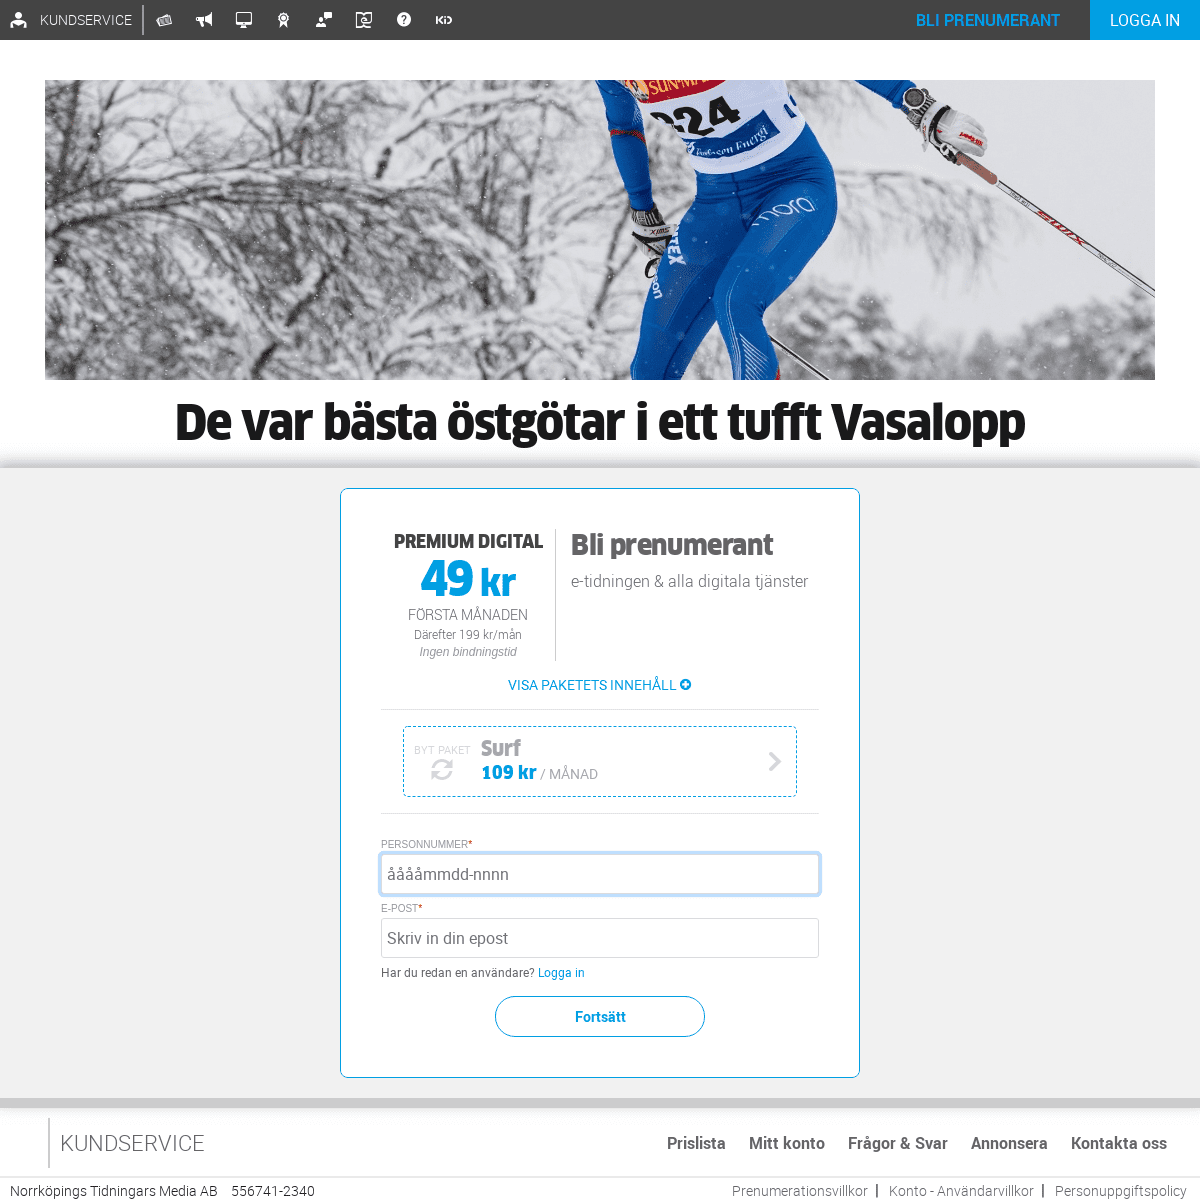 A complete backup of www.corren.se/sport/de-var-basta-ostgotar-i-ett-tufft-vasalopp-om6525870.aspx